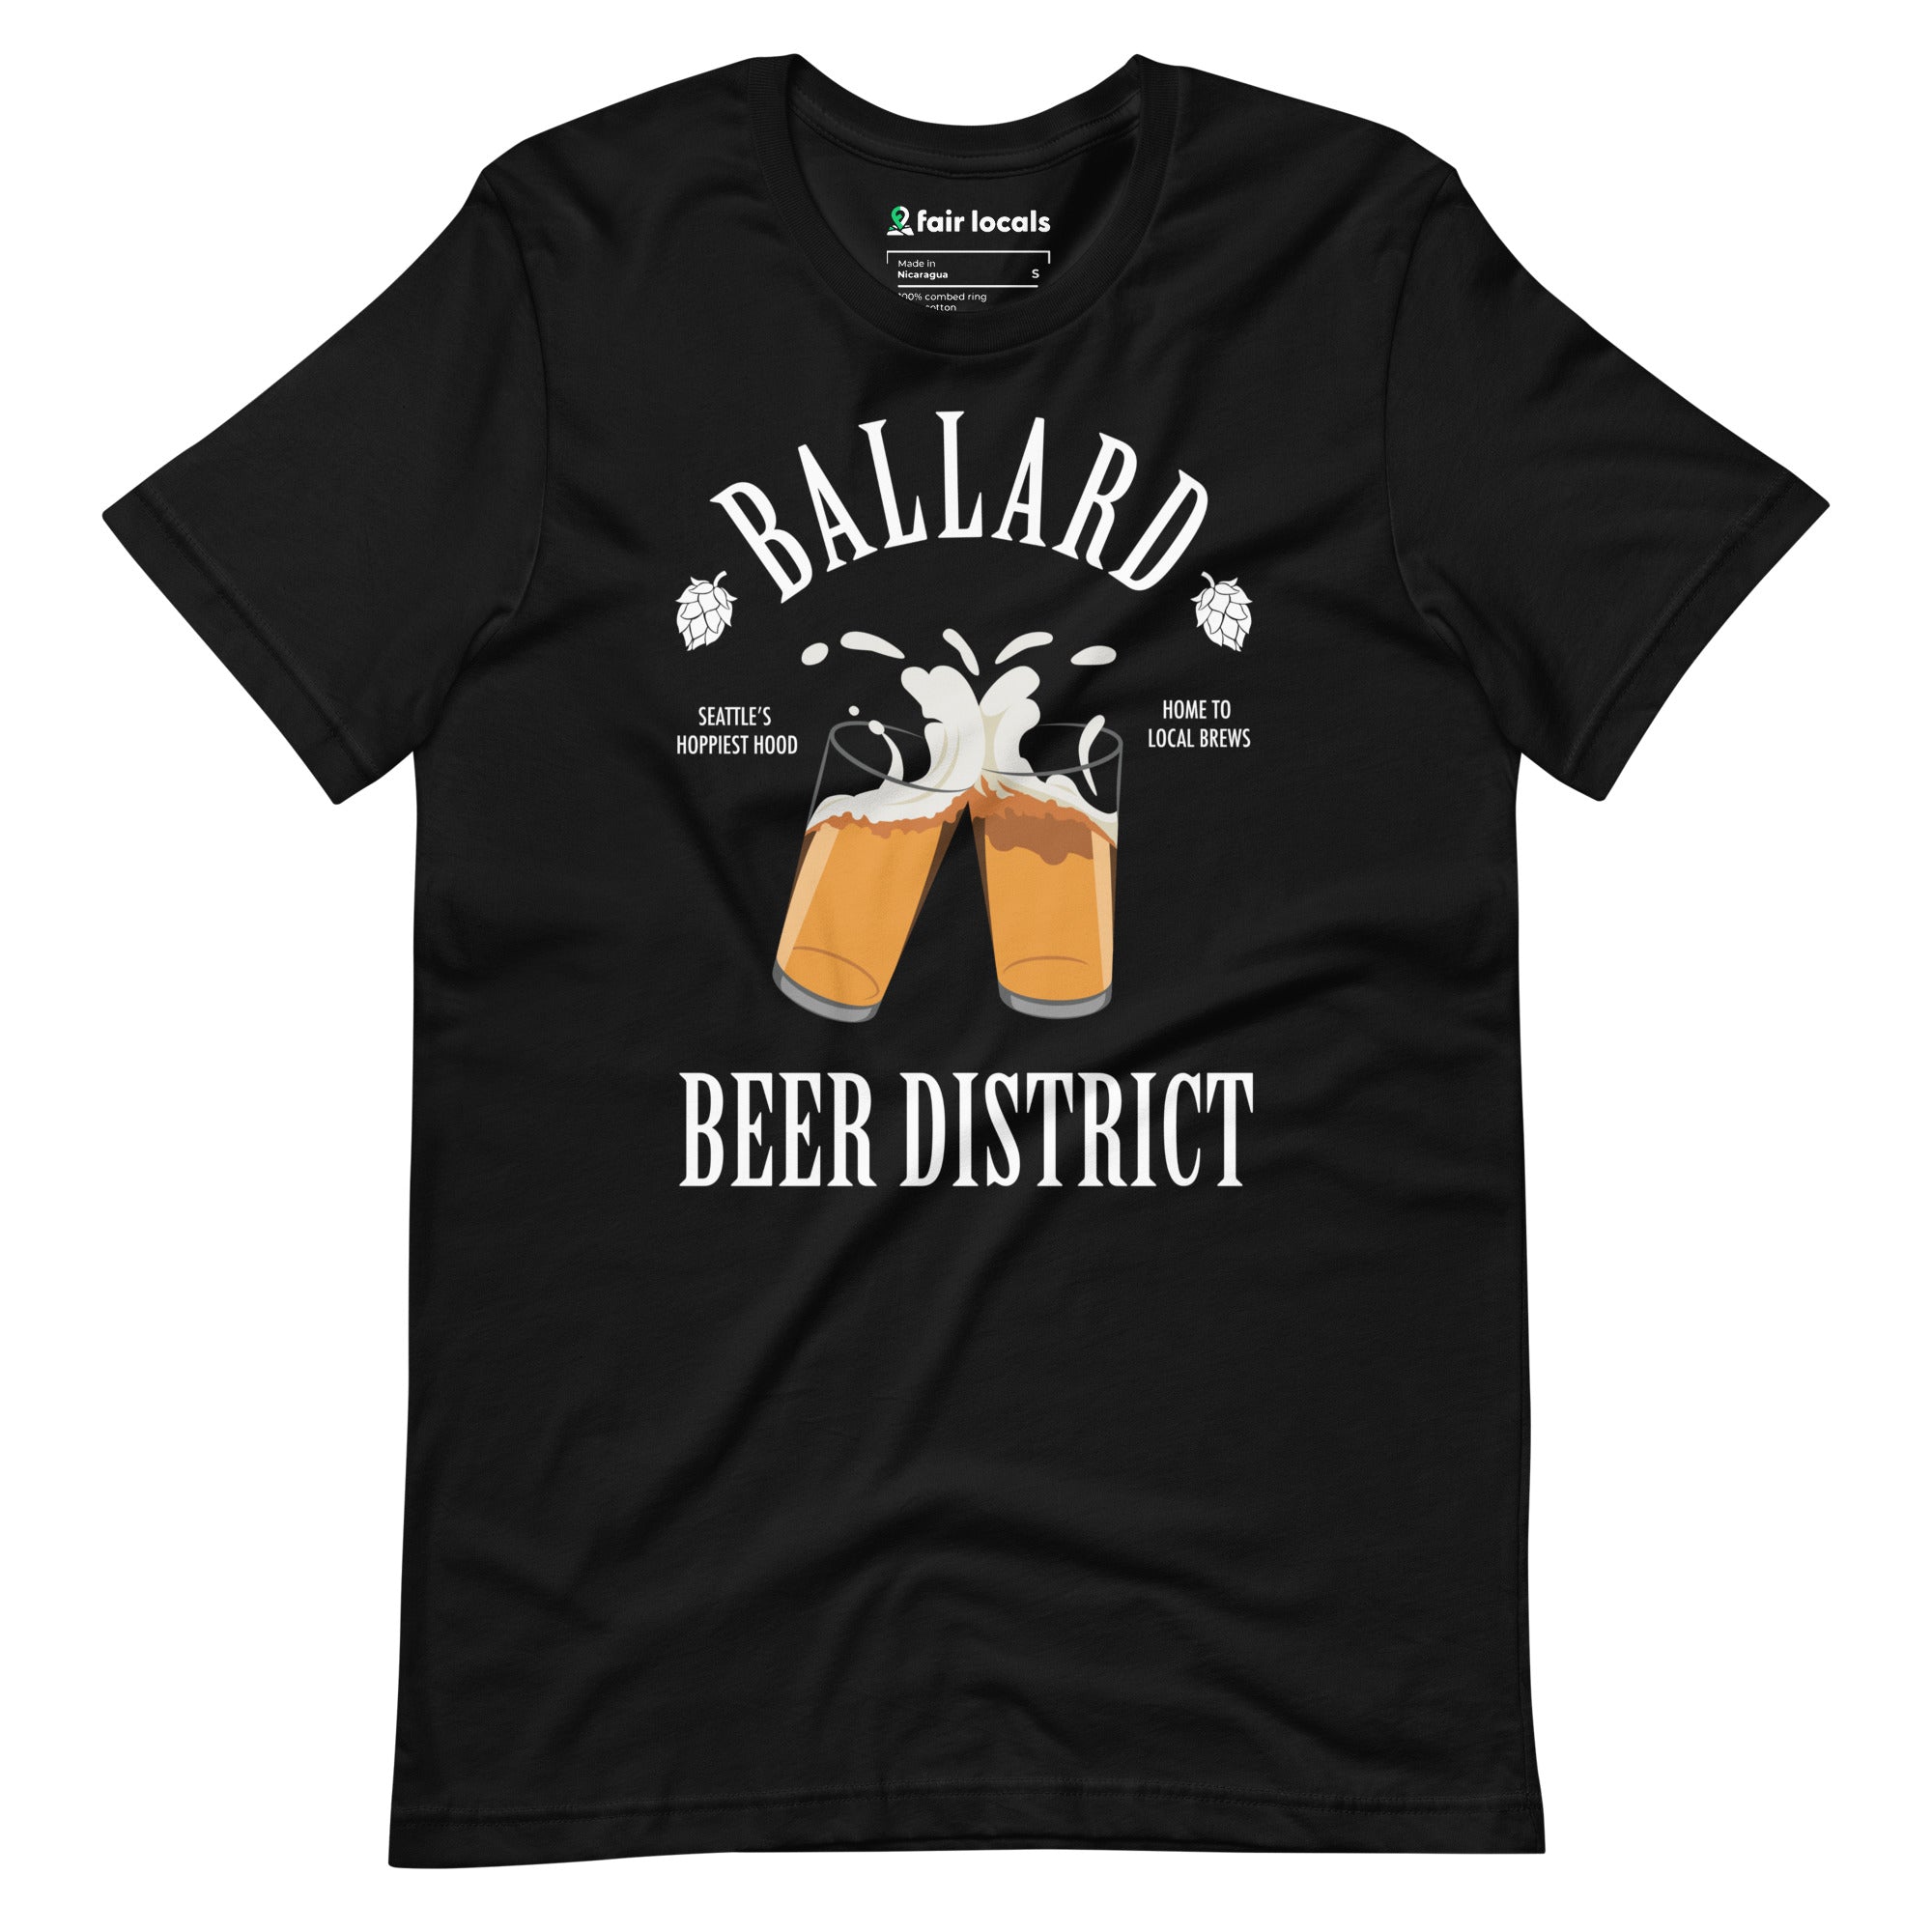 Beer District T-Shirt - Ballard | Seattle, WA